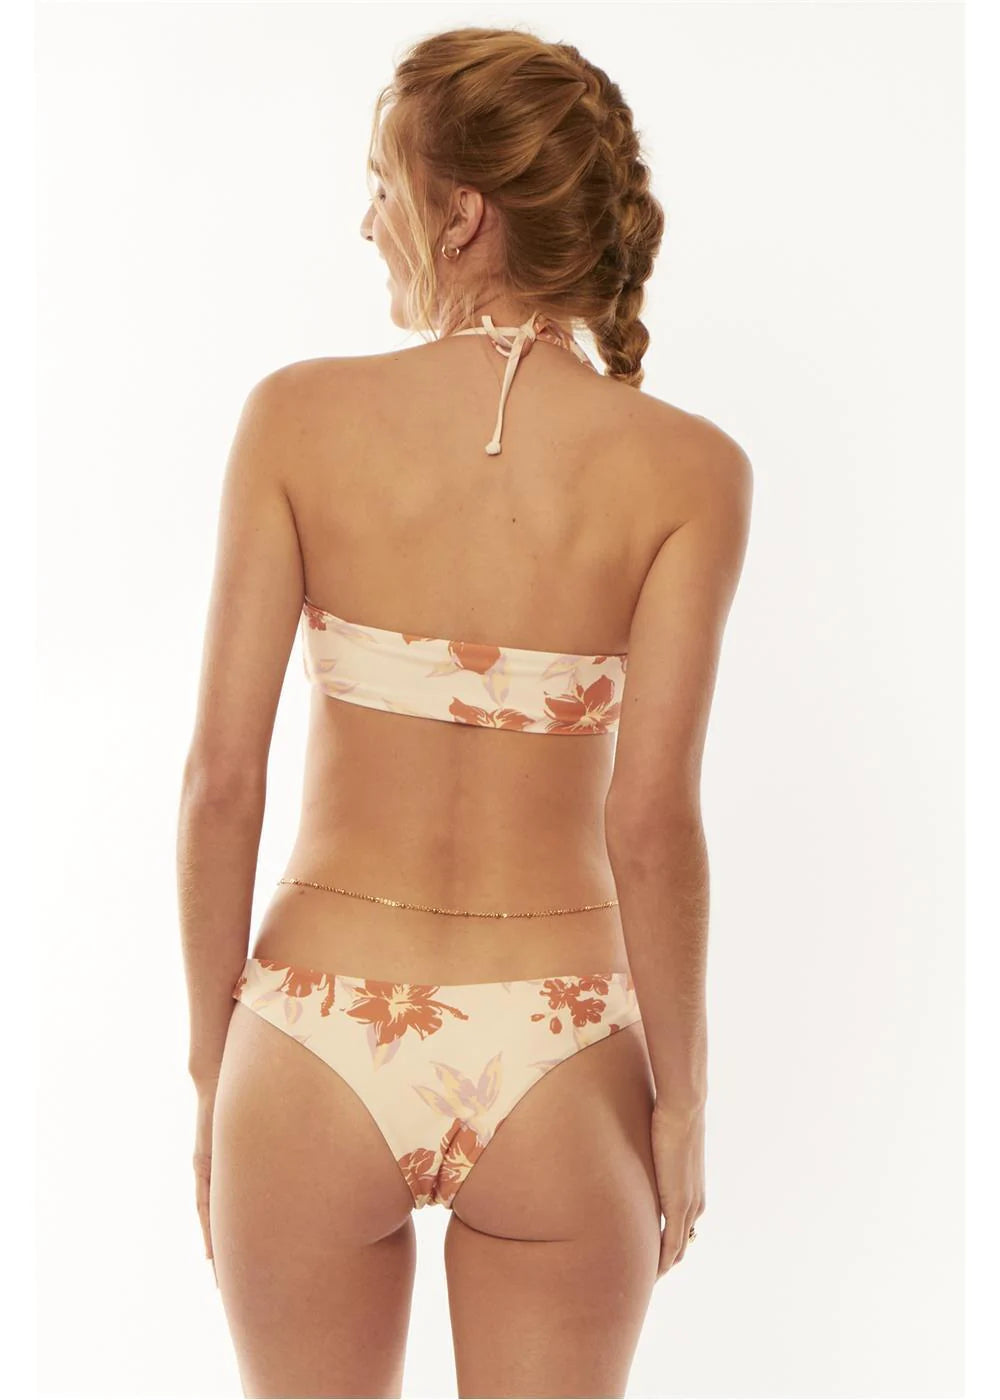 Red Criss Cross Bikini Top 36DD Size XL - $8 - From Kayla